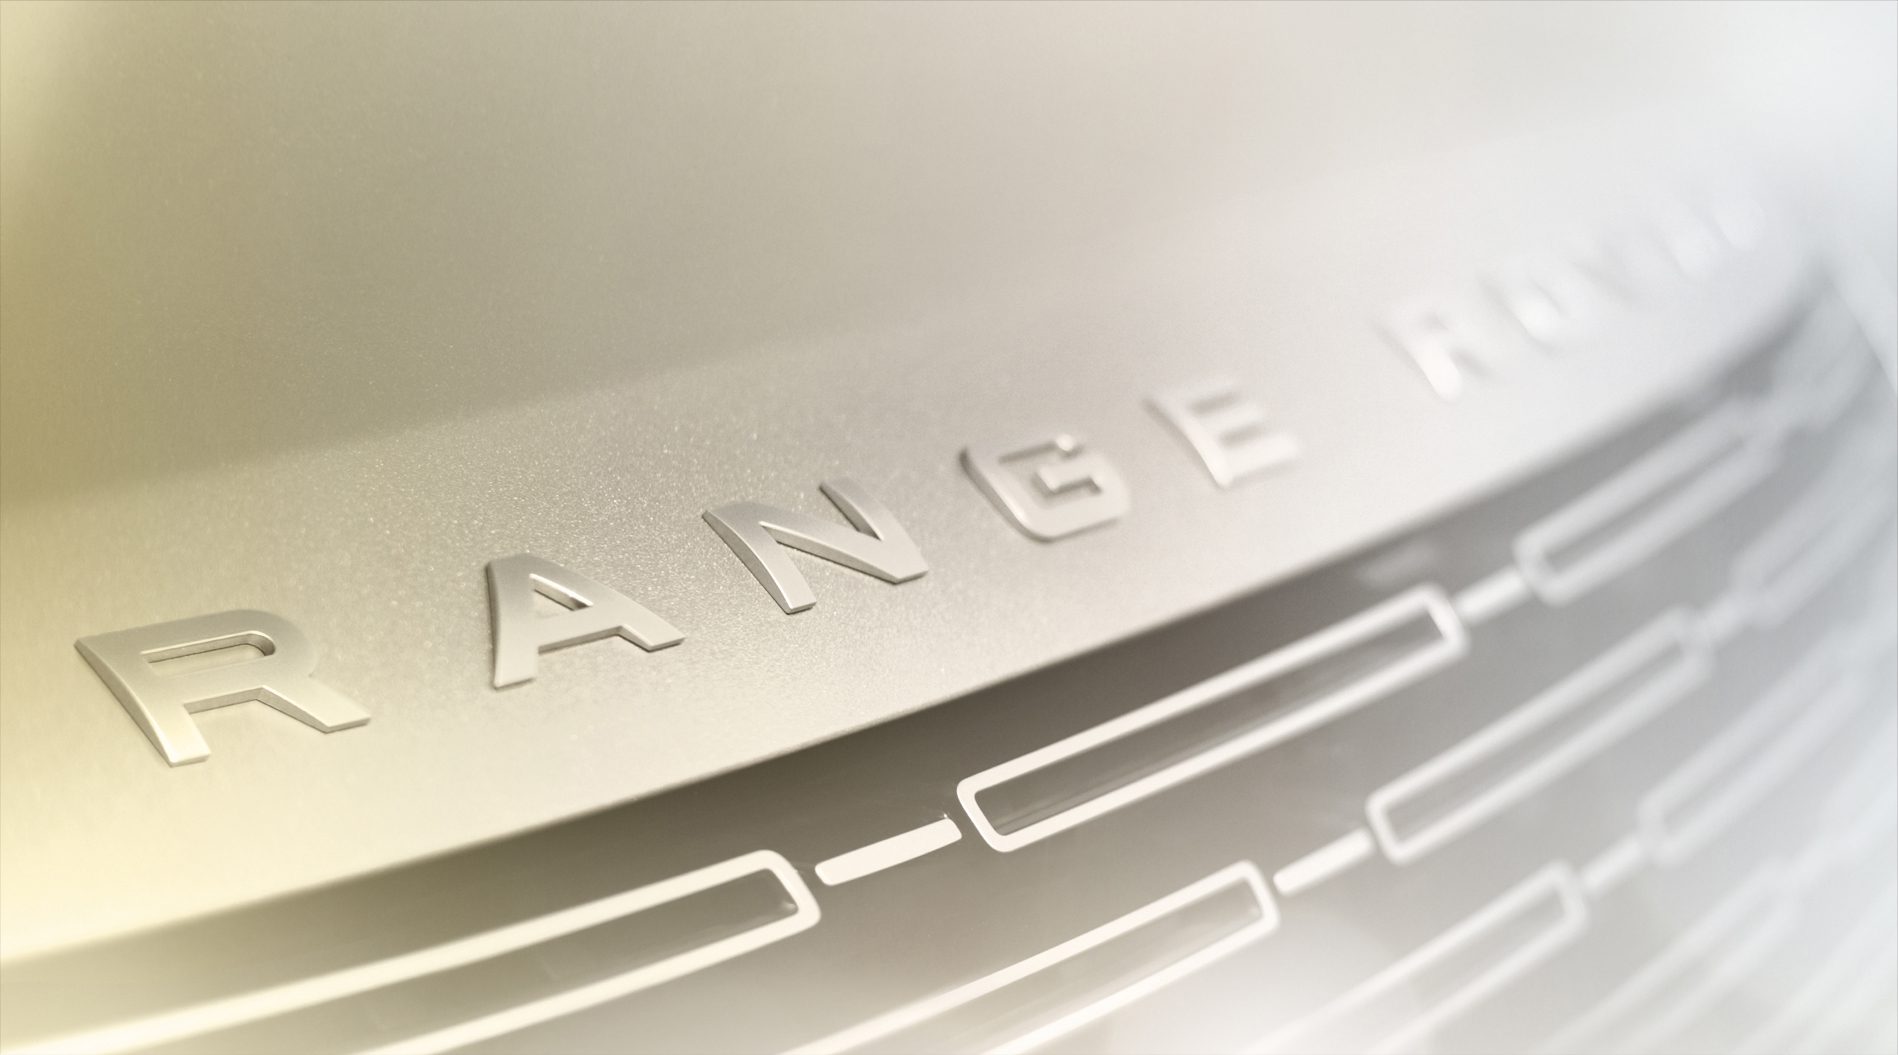 Teaser image of the new 2022 Range Rover